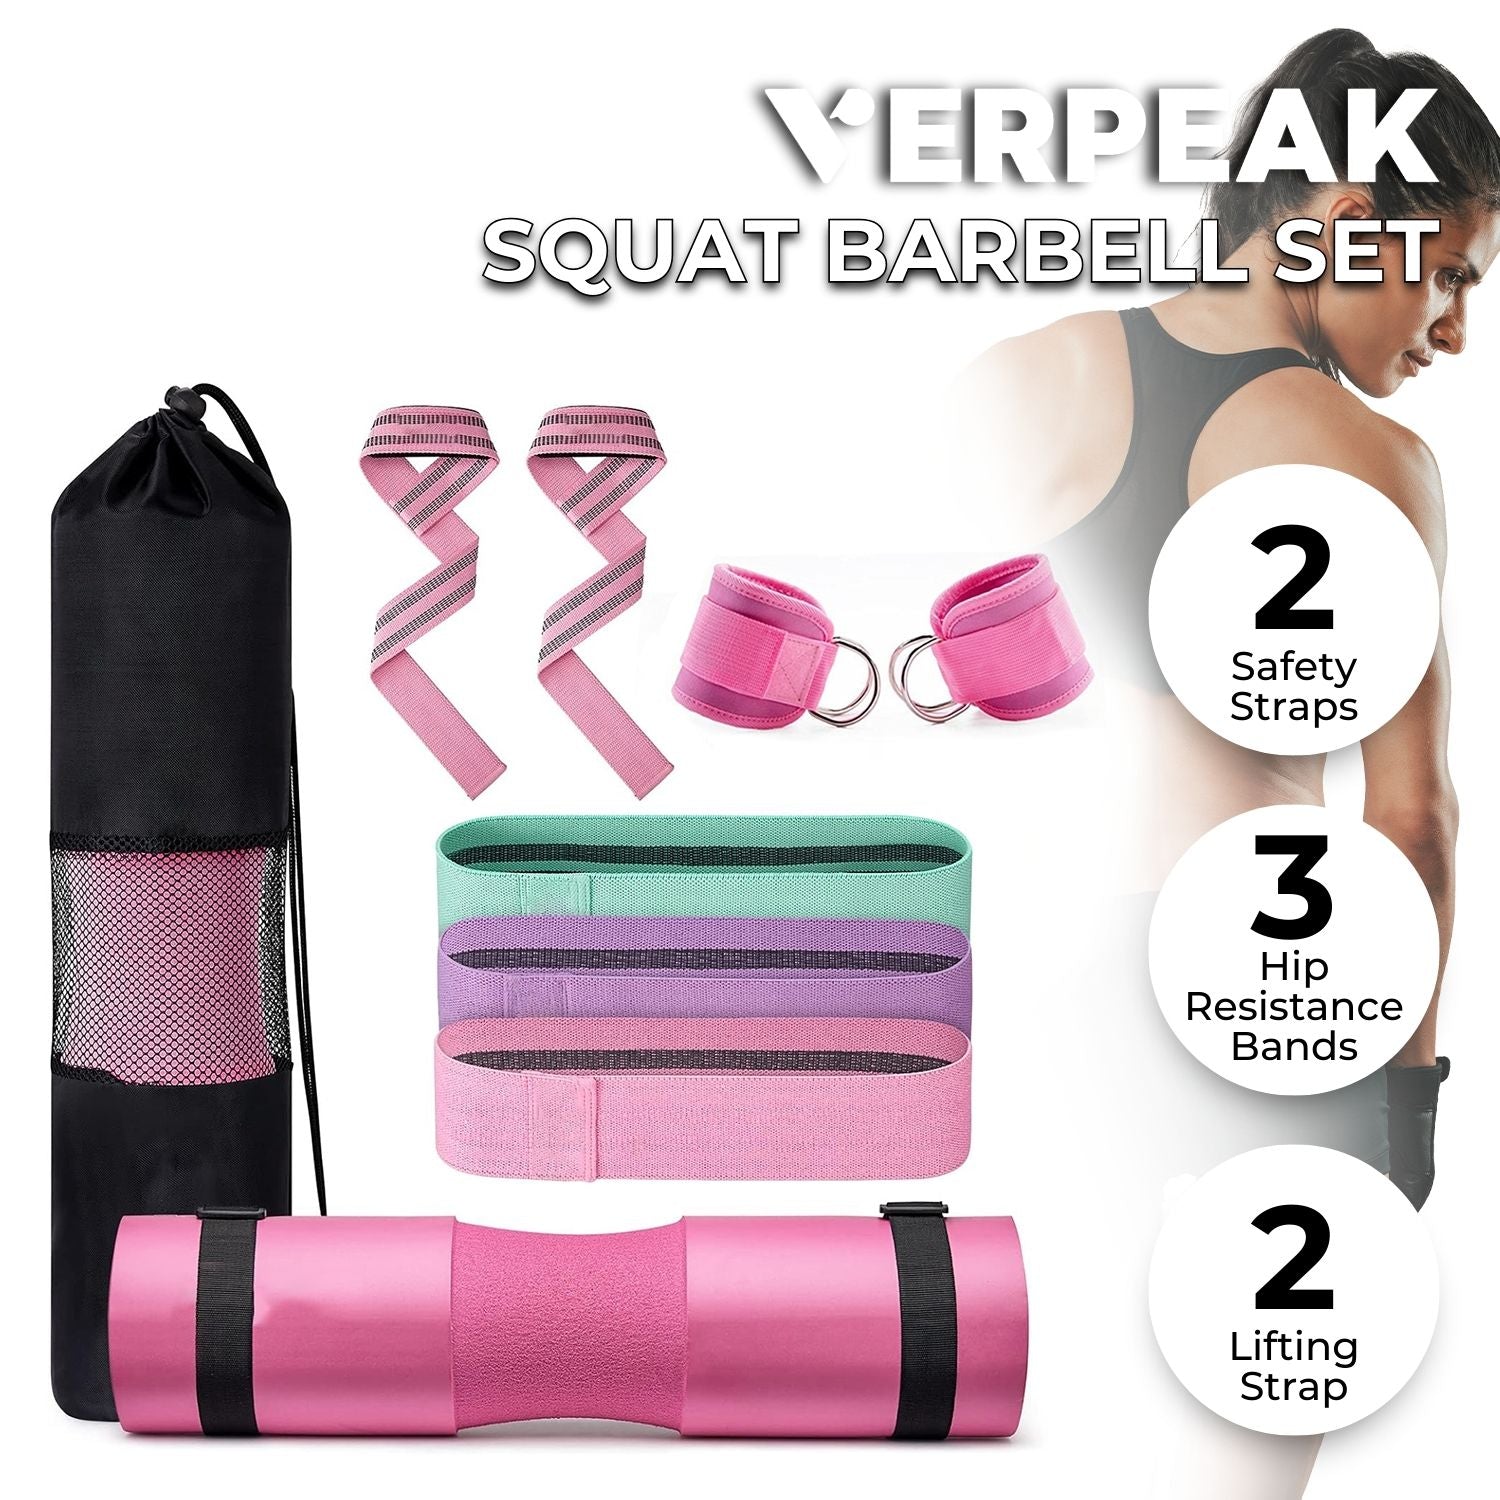 VERPEAK Barbell Squat Pad set,2 Safety Straps, 3 Hip Resistance Bands, 2 Lifting Strap, Barbell Pad and Bag (Pink)